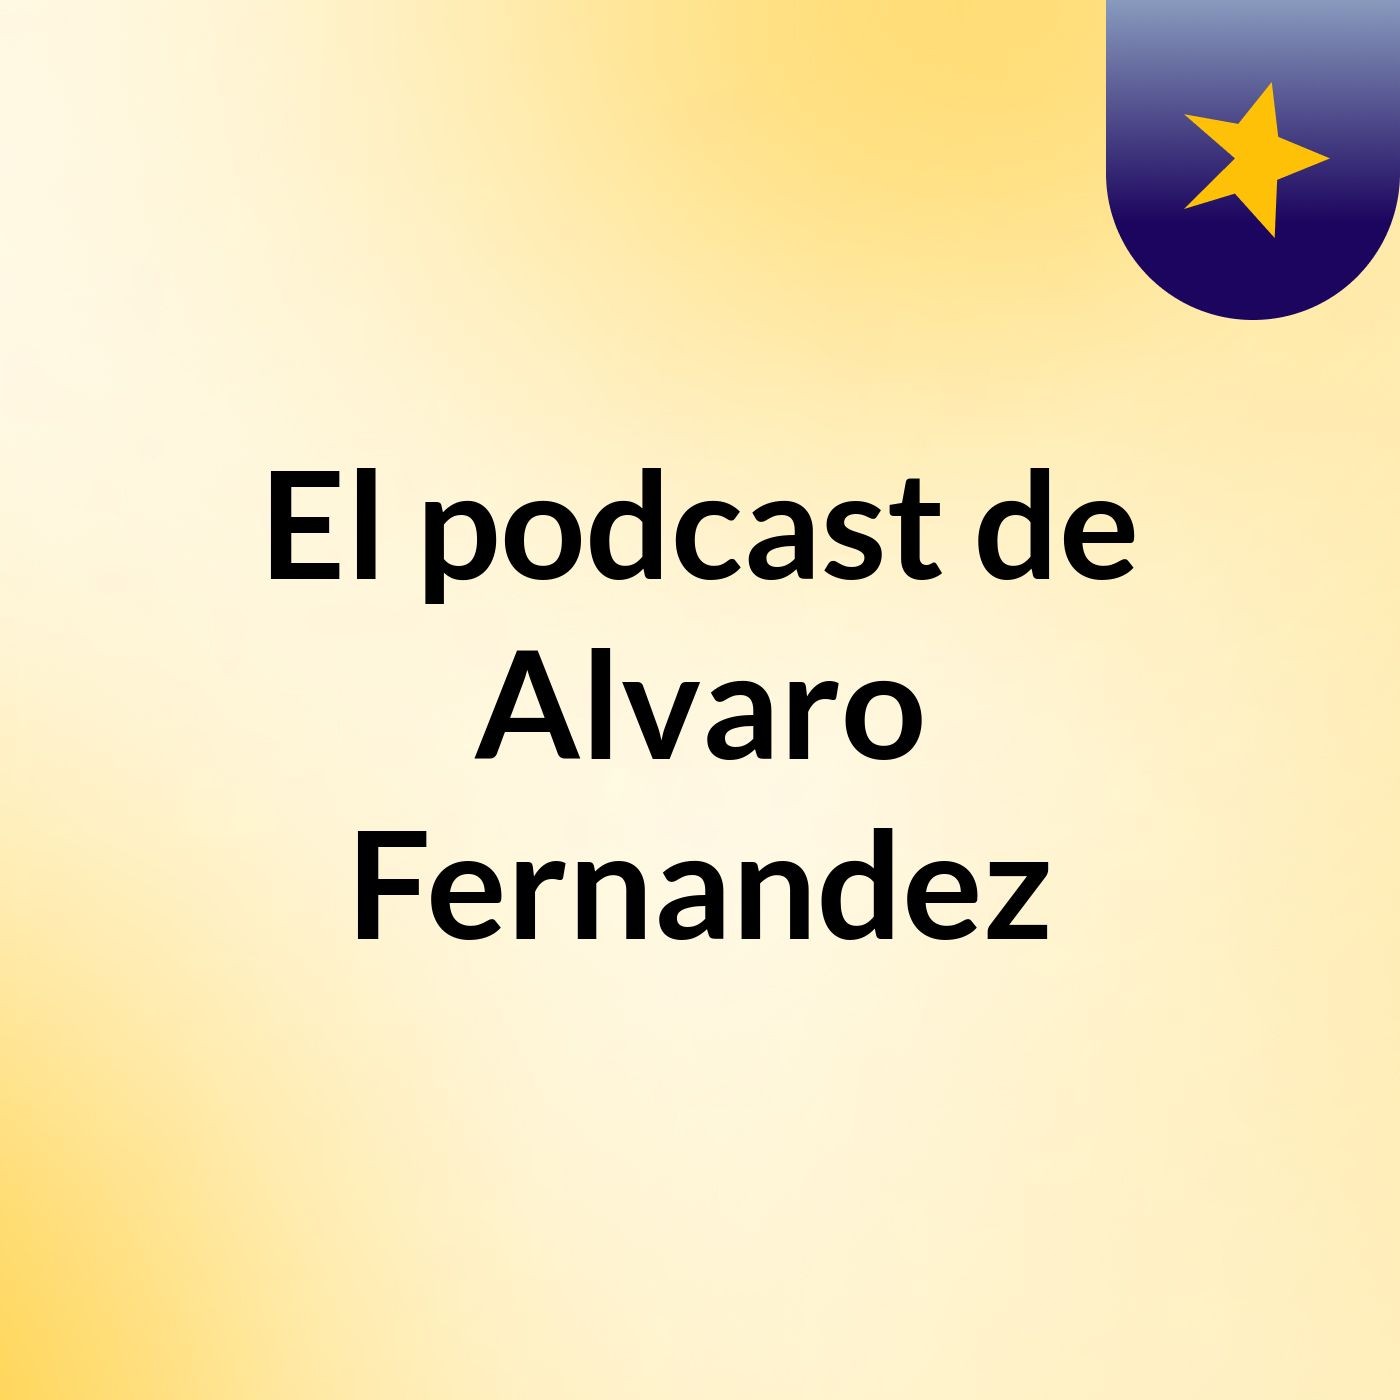 El podcast de Alvaro Fernandez